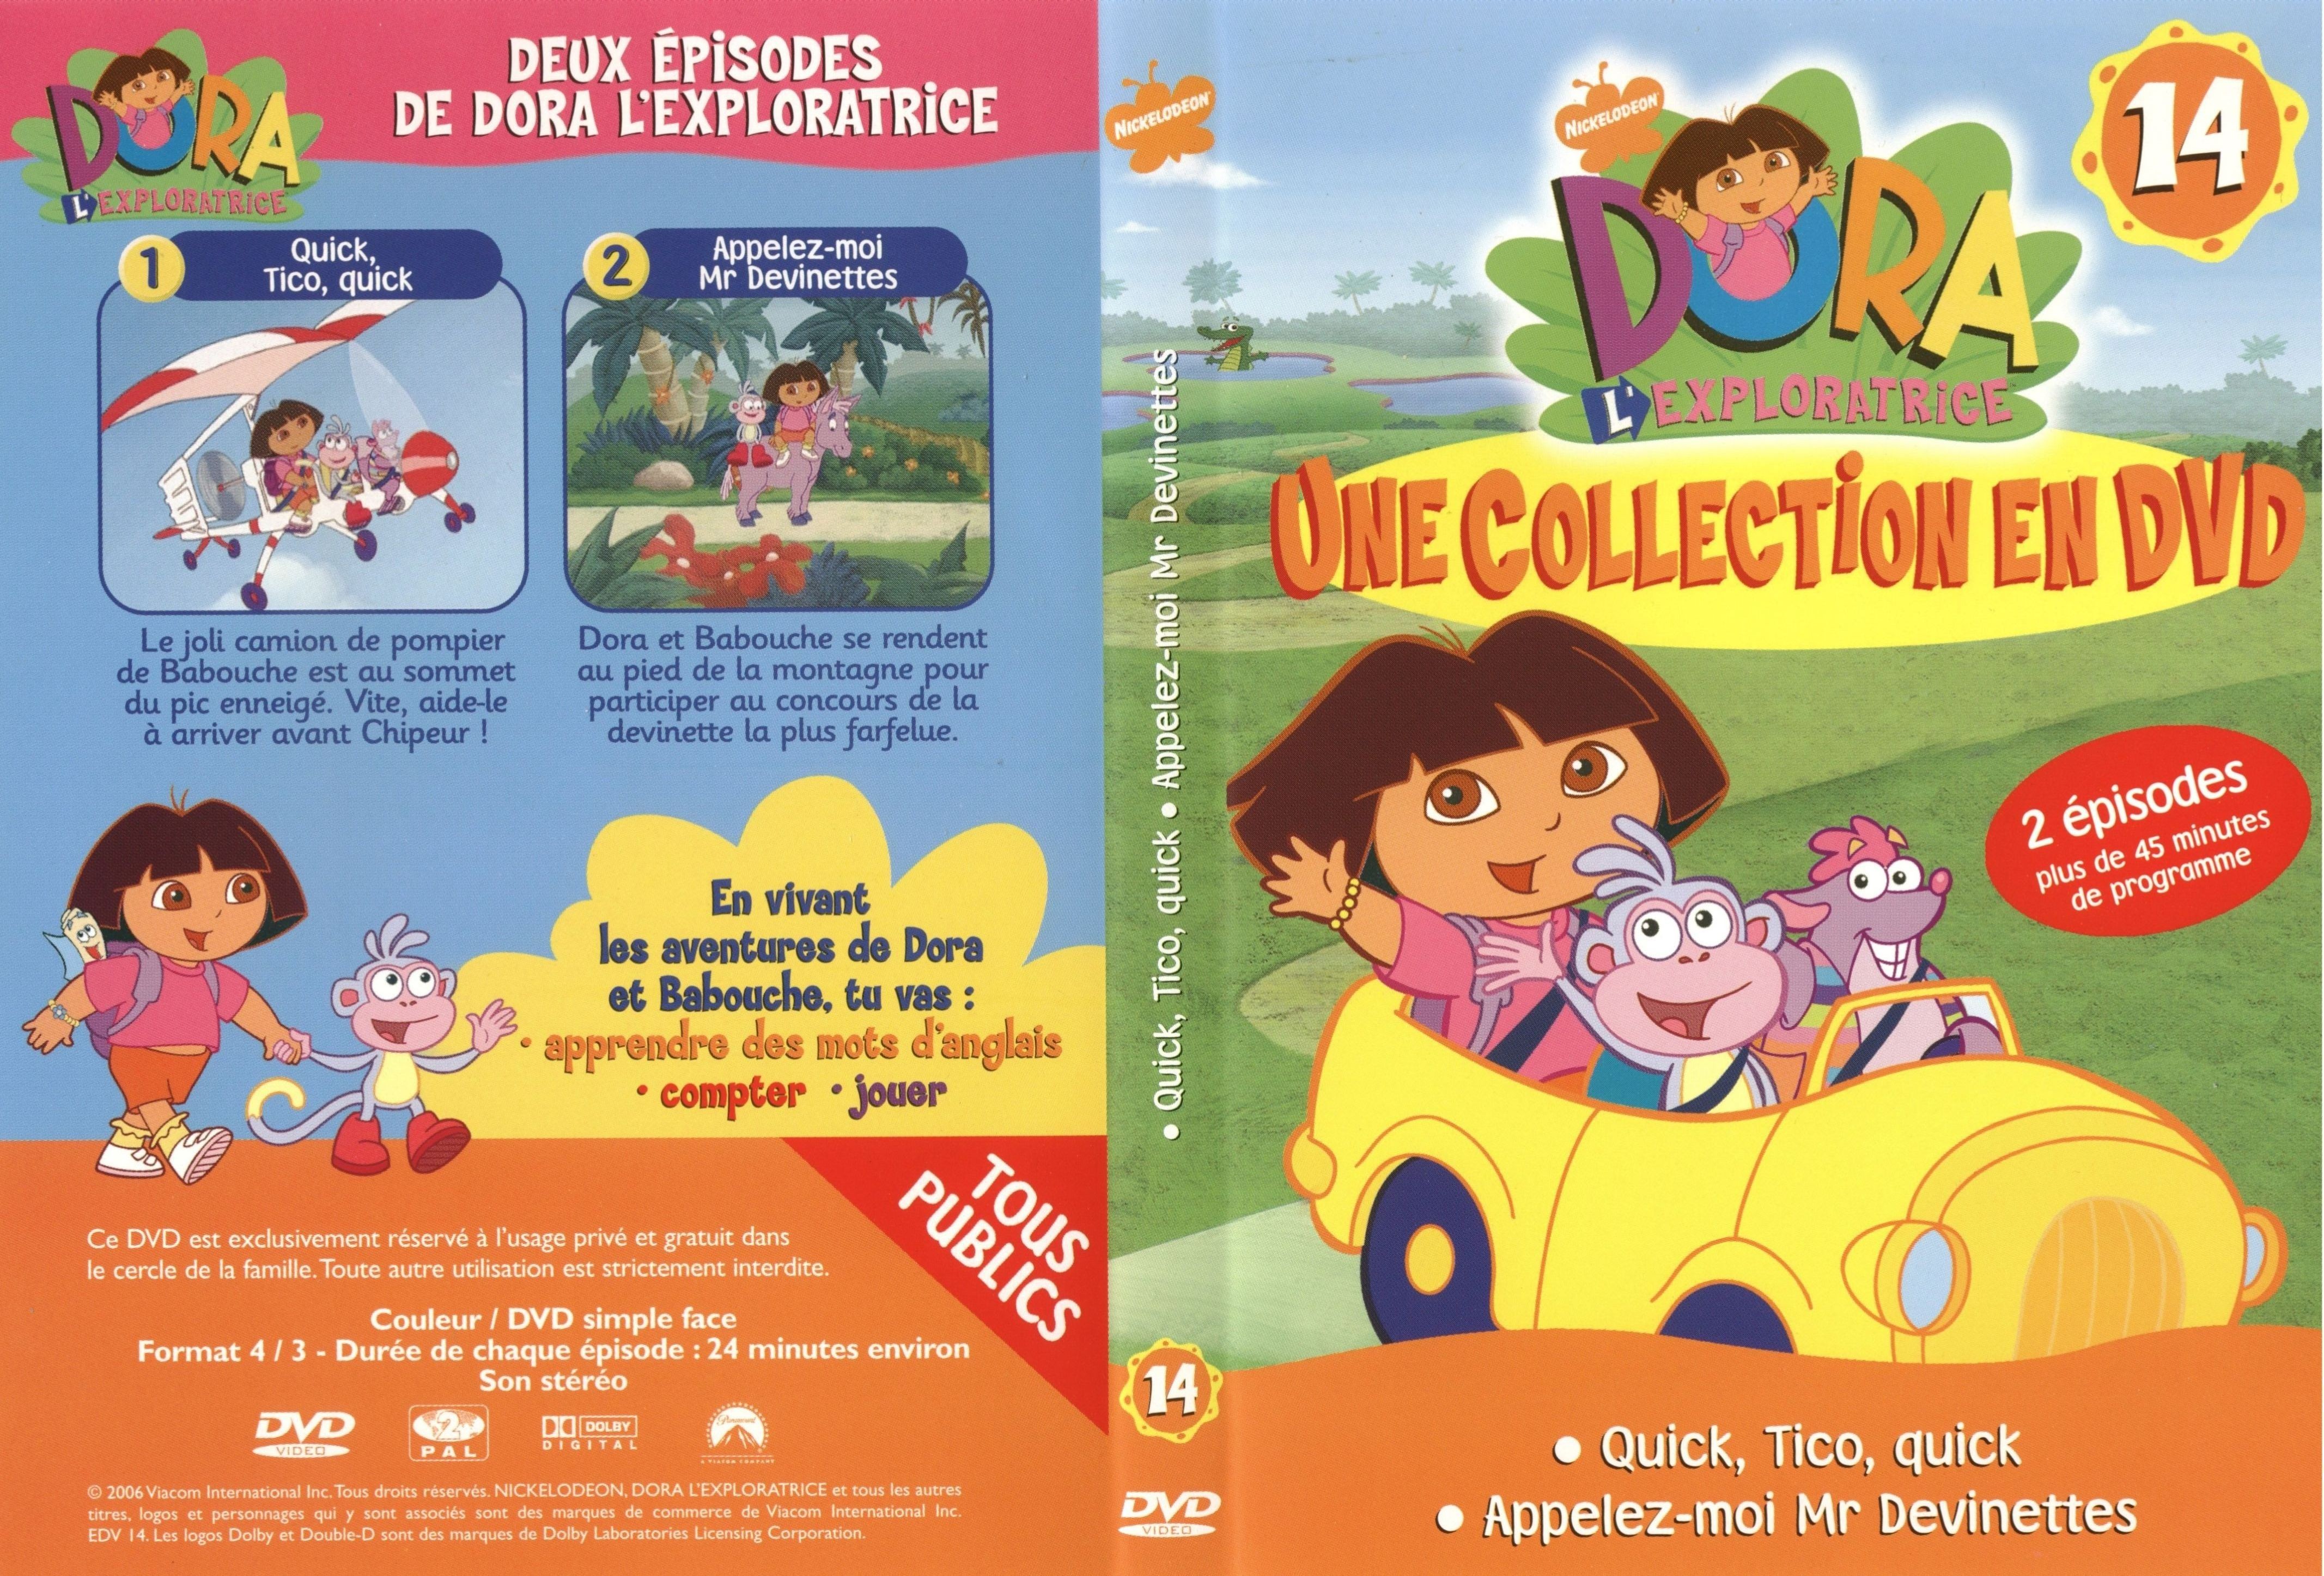 Jaquette DVD de Dora l'exploratrice vol 14 - Cinéma Passion